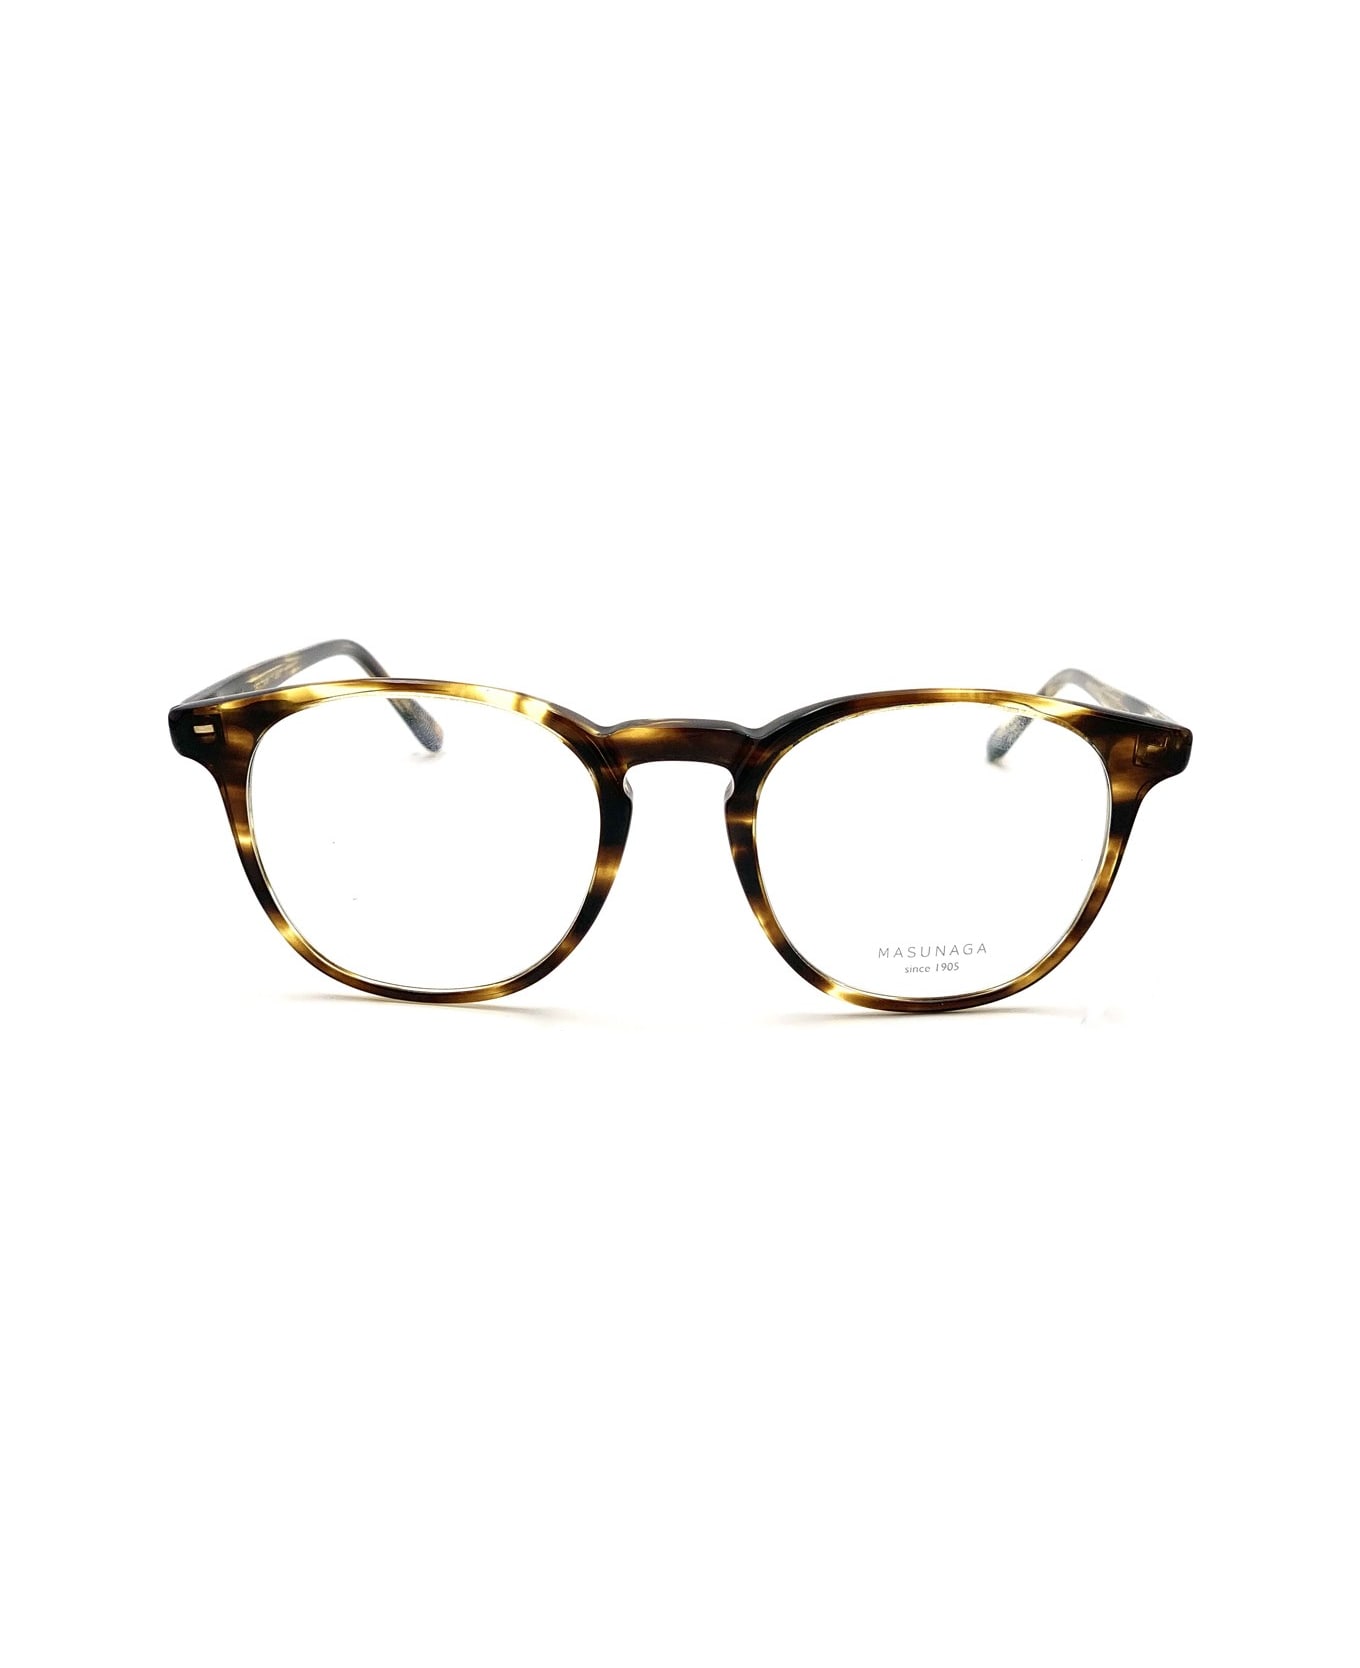 Masunaga Gsm 07u Glasses - Marrone アイウェア